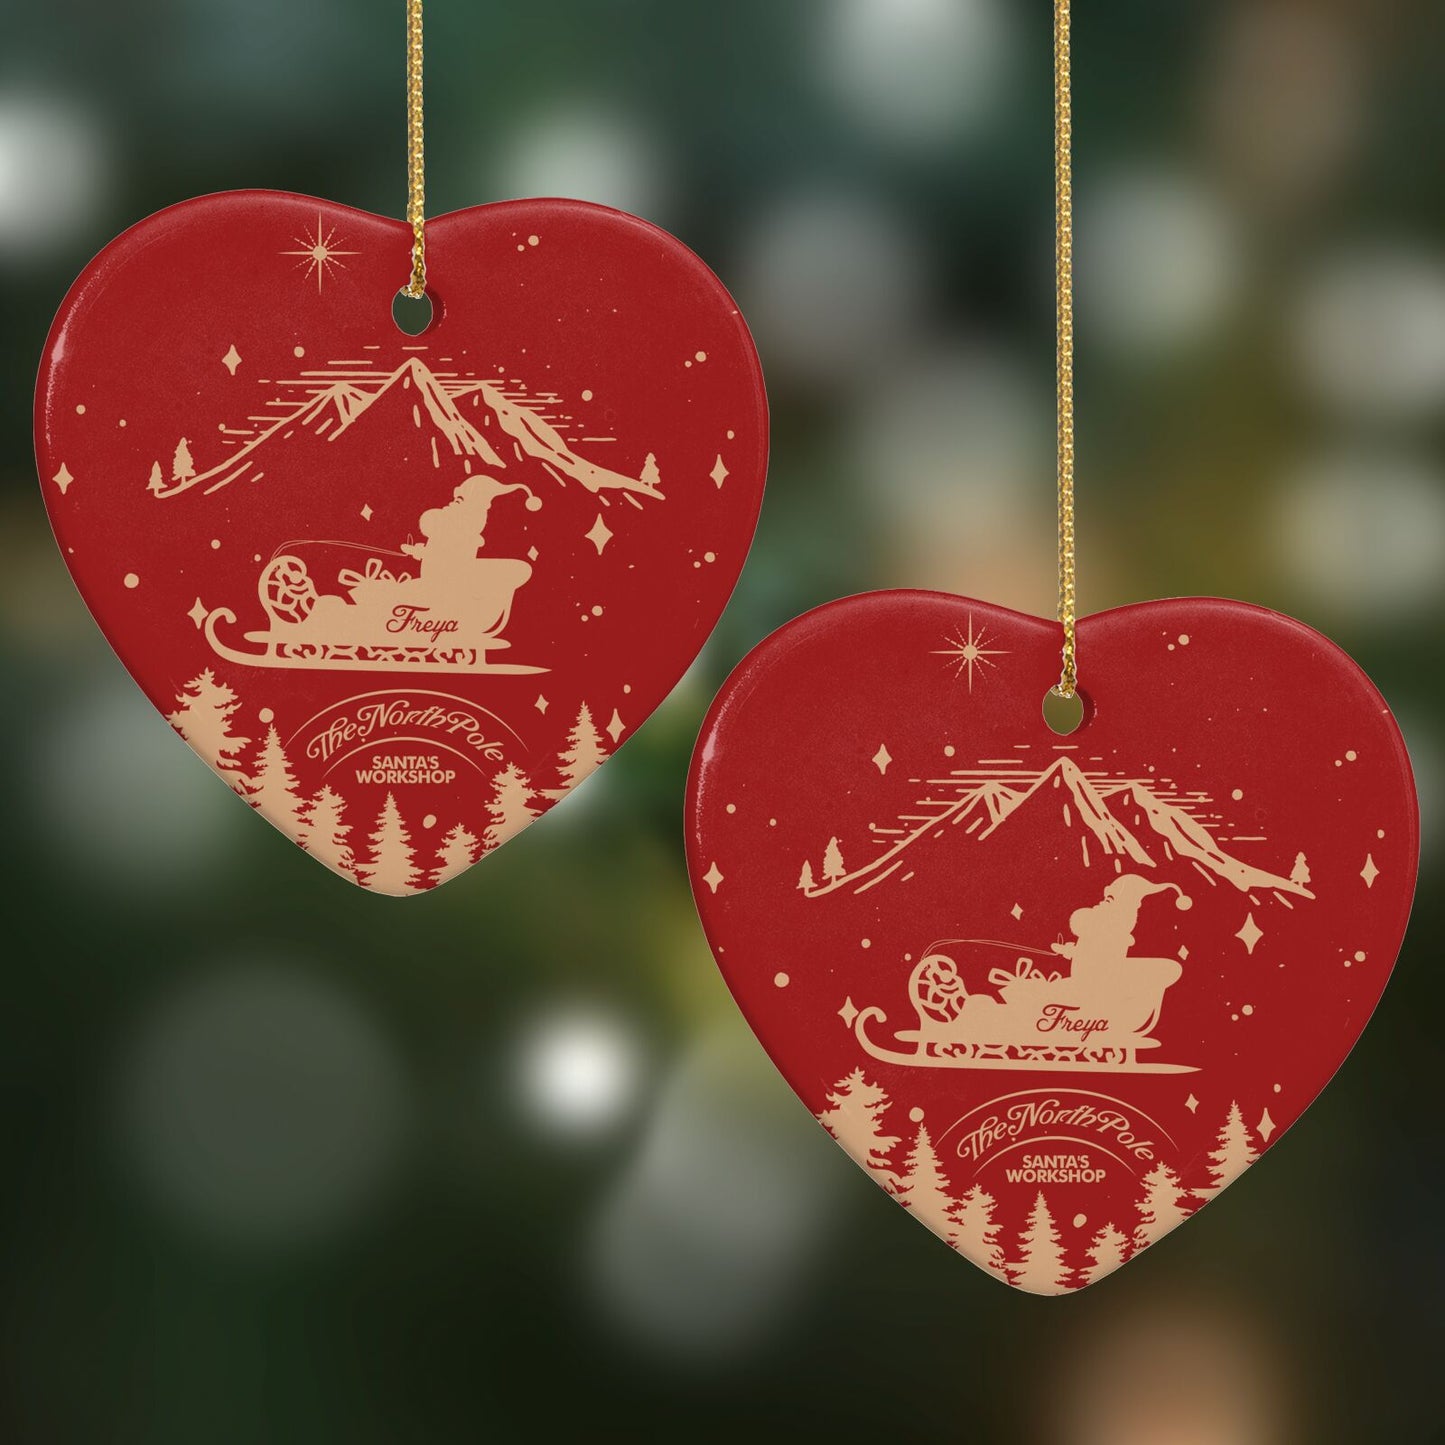 Santas Workshop Personalised Heart Decoration on Christmas Background